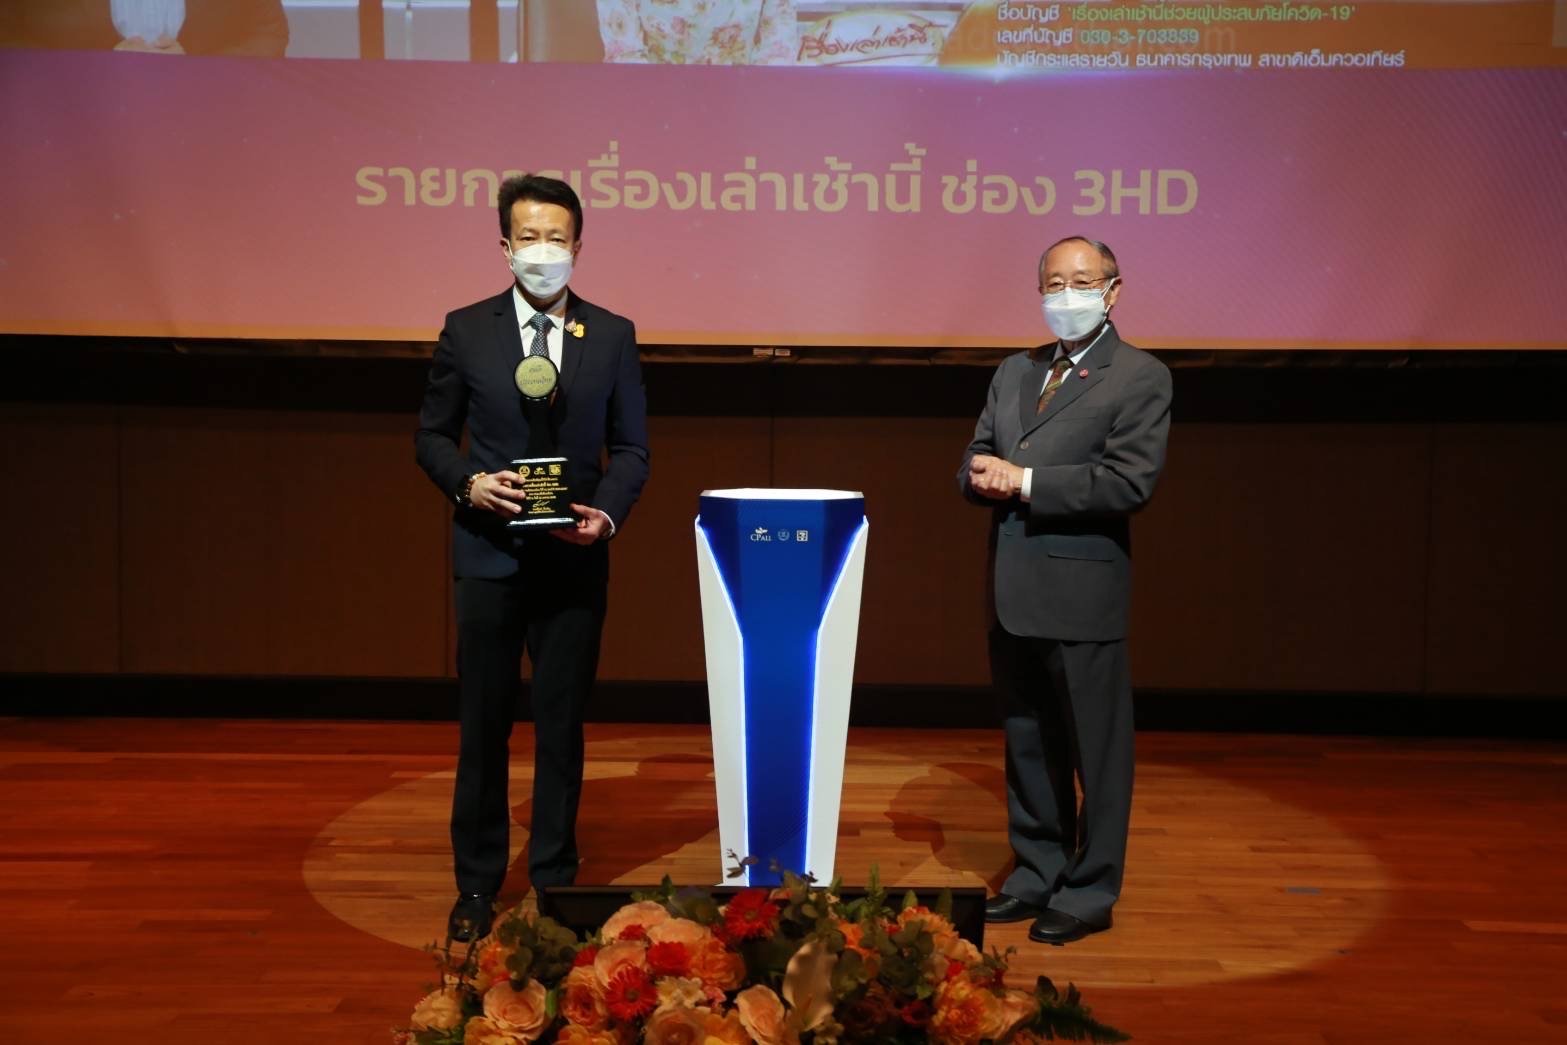 Ruang-lao Chaw-nee Received Award